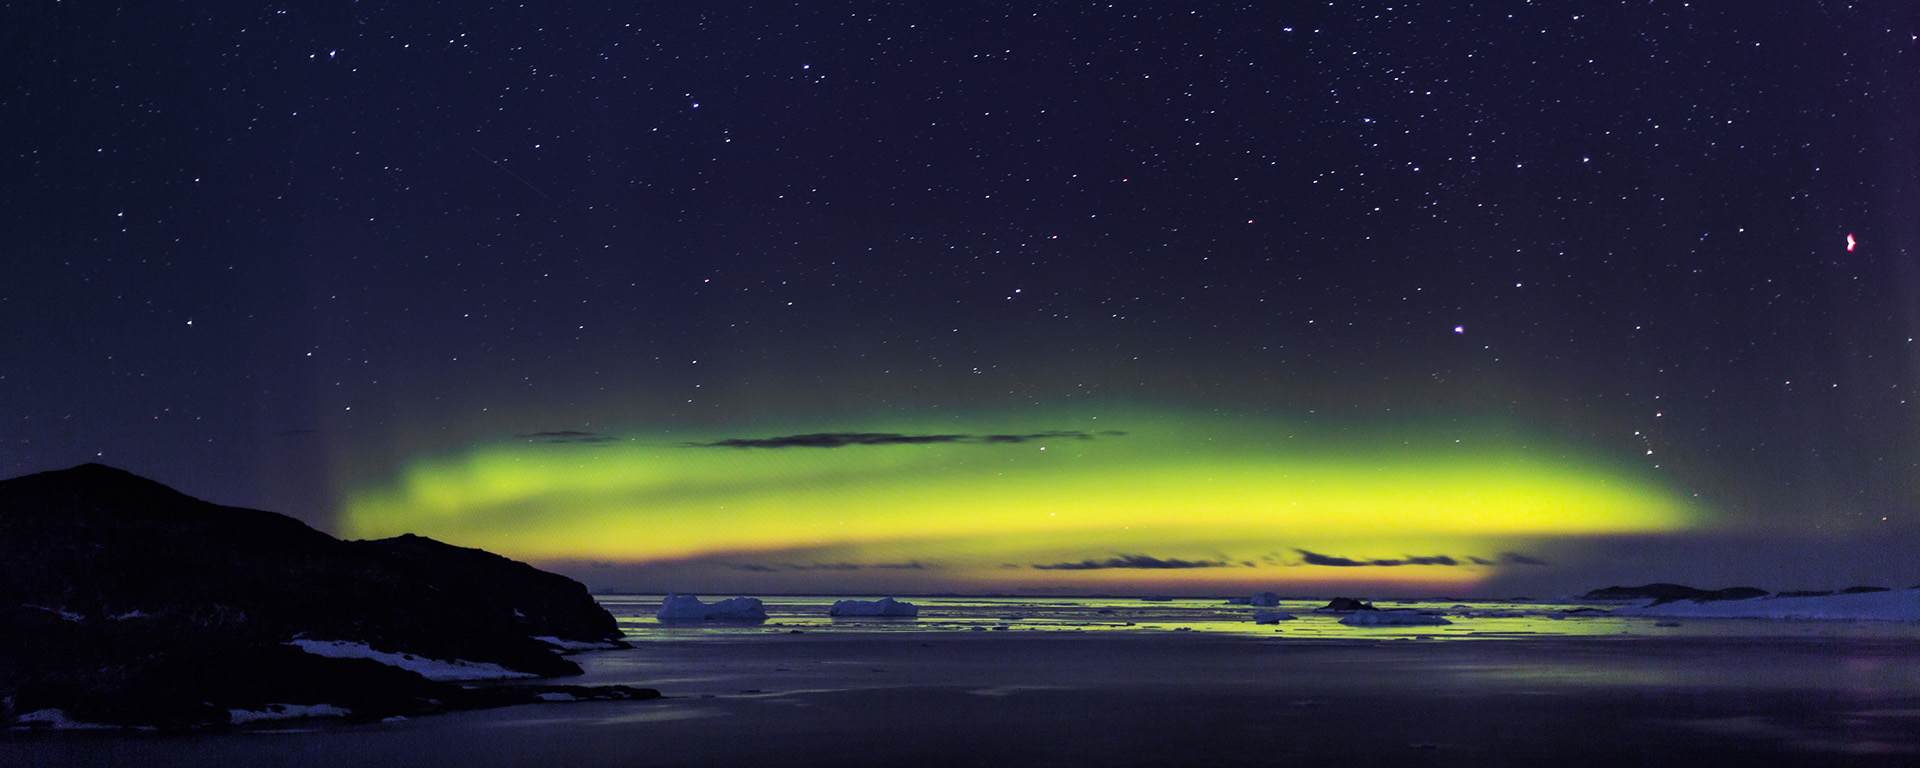 Aurora Australis green lights over the coastline